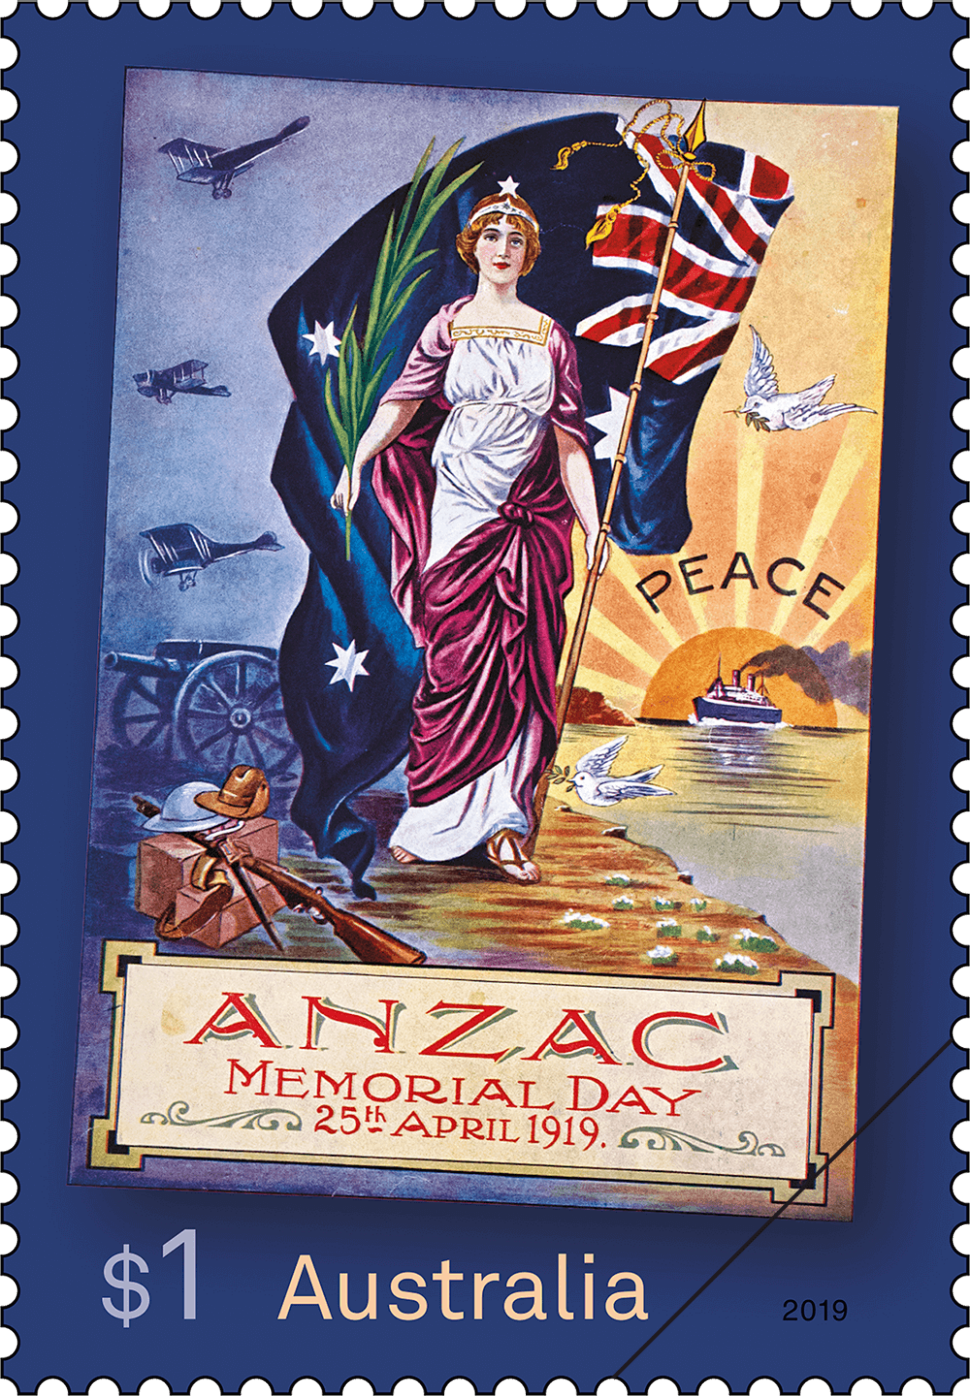 $1 - Anzac Memorial Day 1919